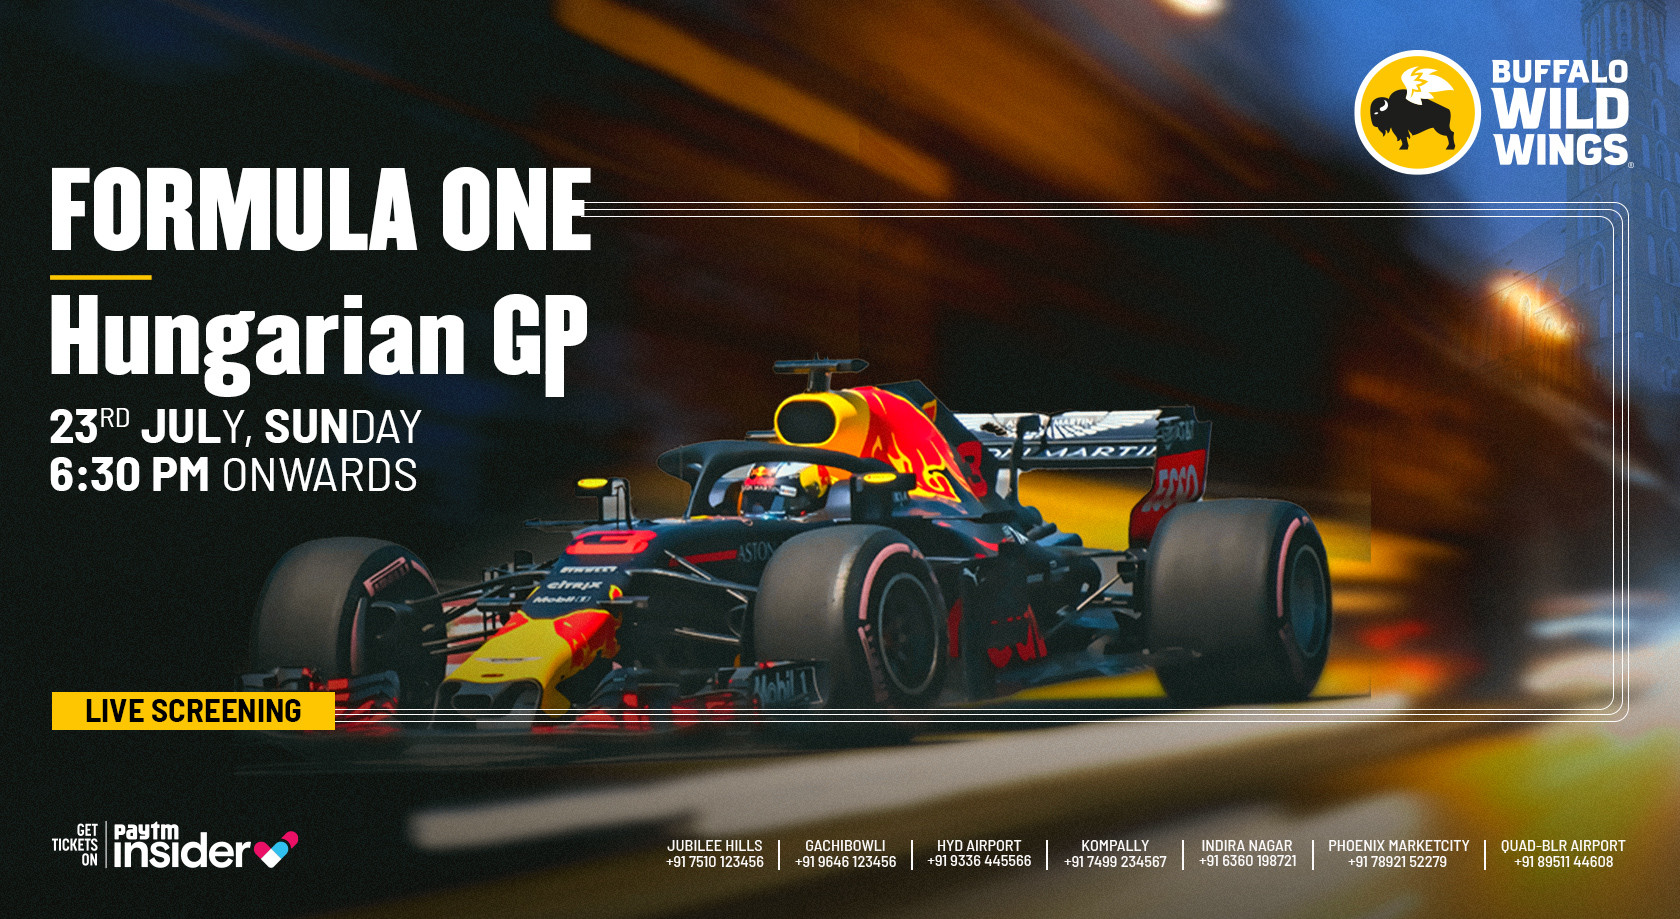 Formula One Hungarian GP Live Screening at BWW Jubilee Hills 23rd July, Sunday